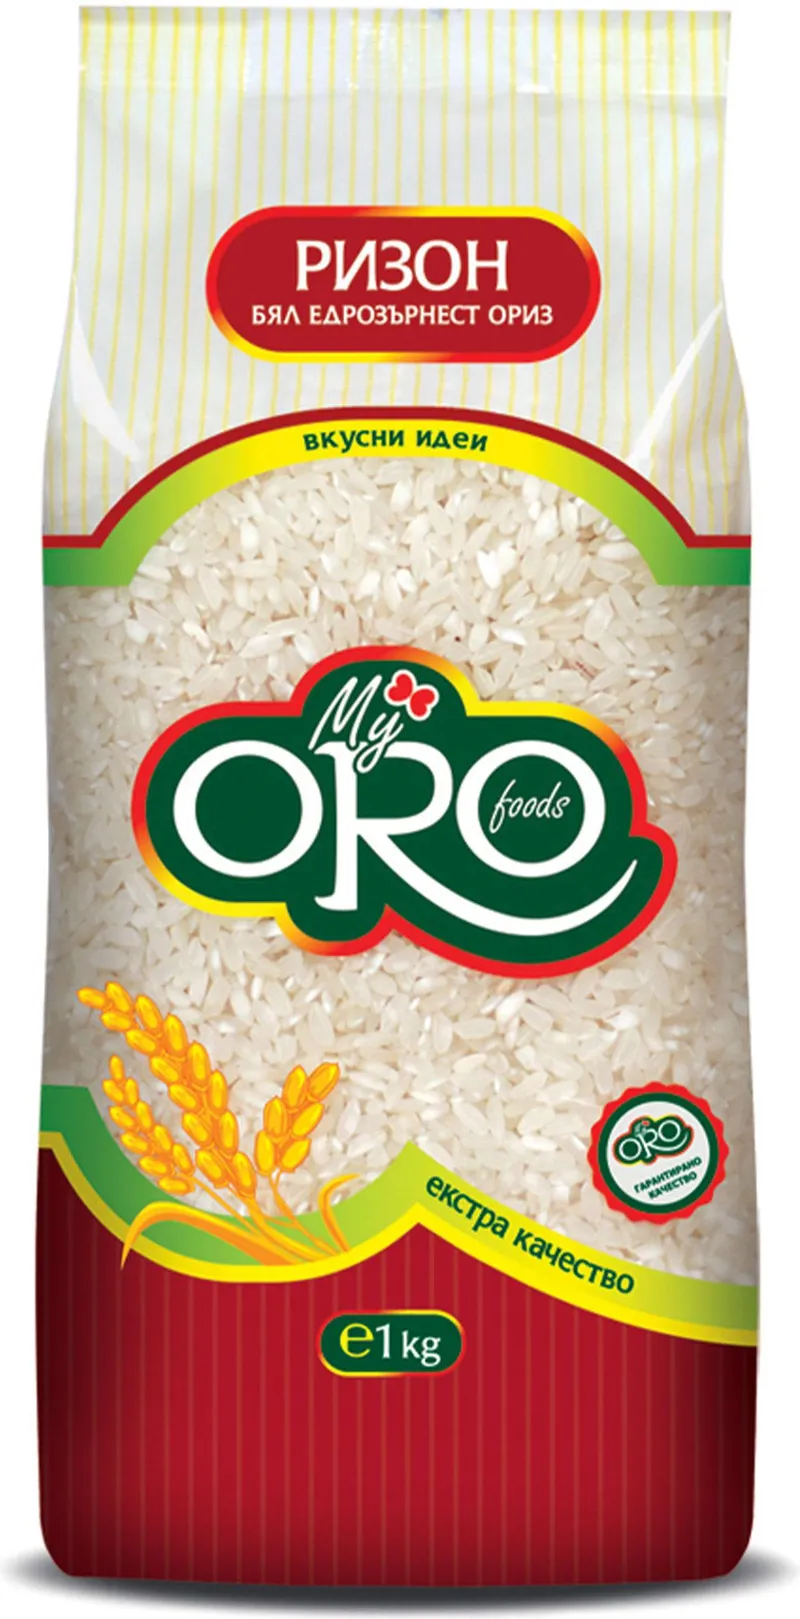 Ориз Ризон 1 Кг Оро-